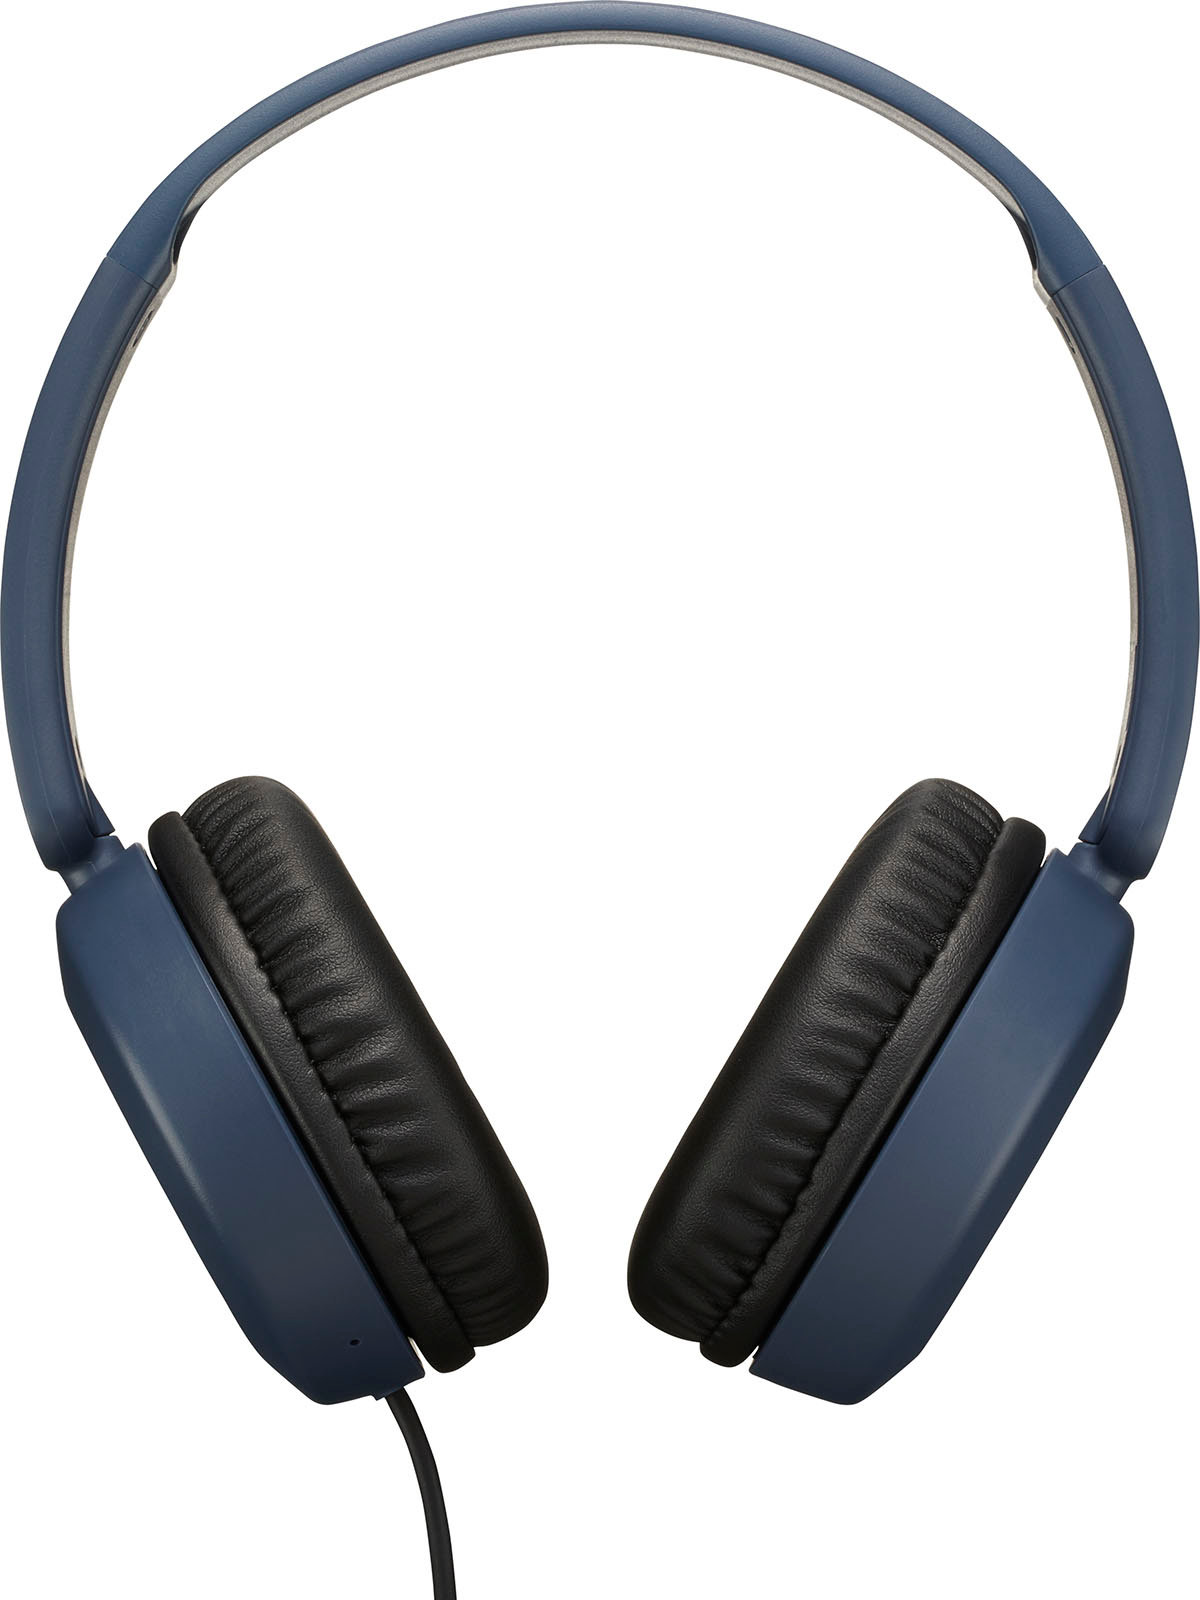 Left View: Audio-Technica - ATH-M30x On-Ear Headphones - Black